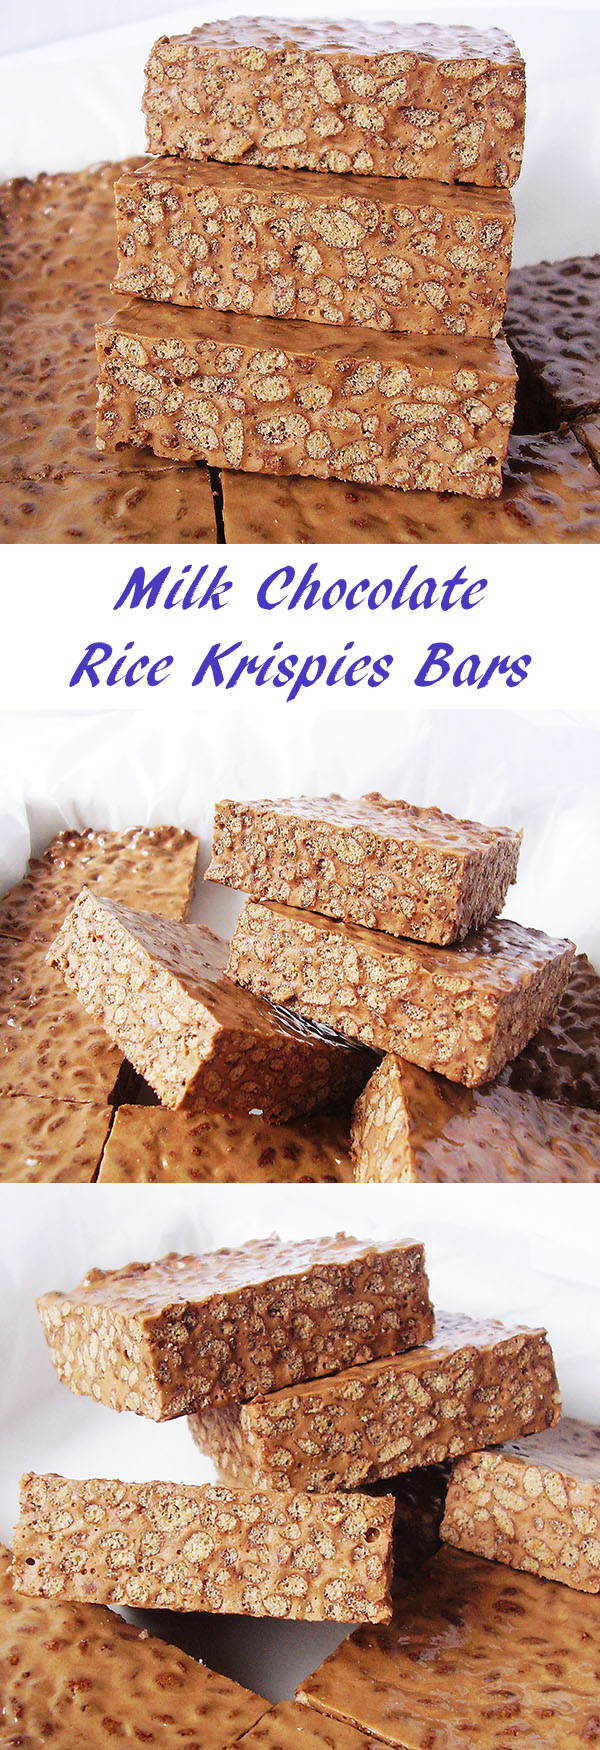 Milk Chocolate Rice Krispies Bars : no bake delicacy.